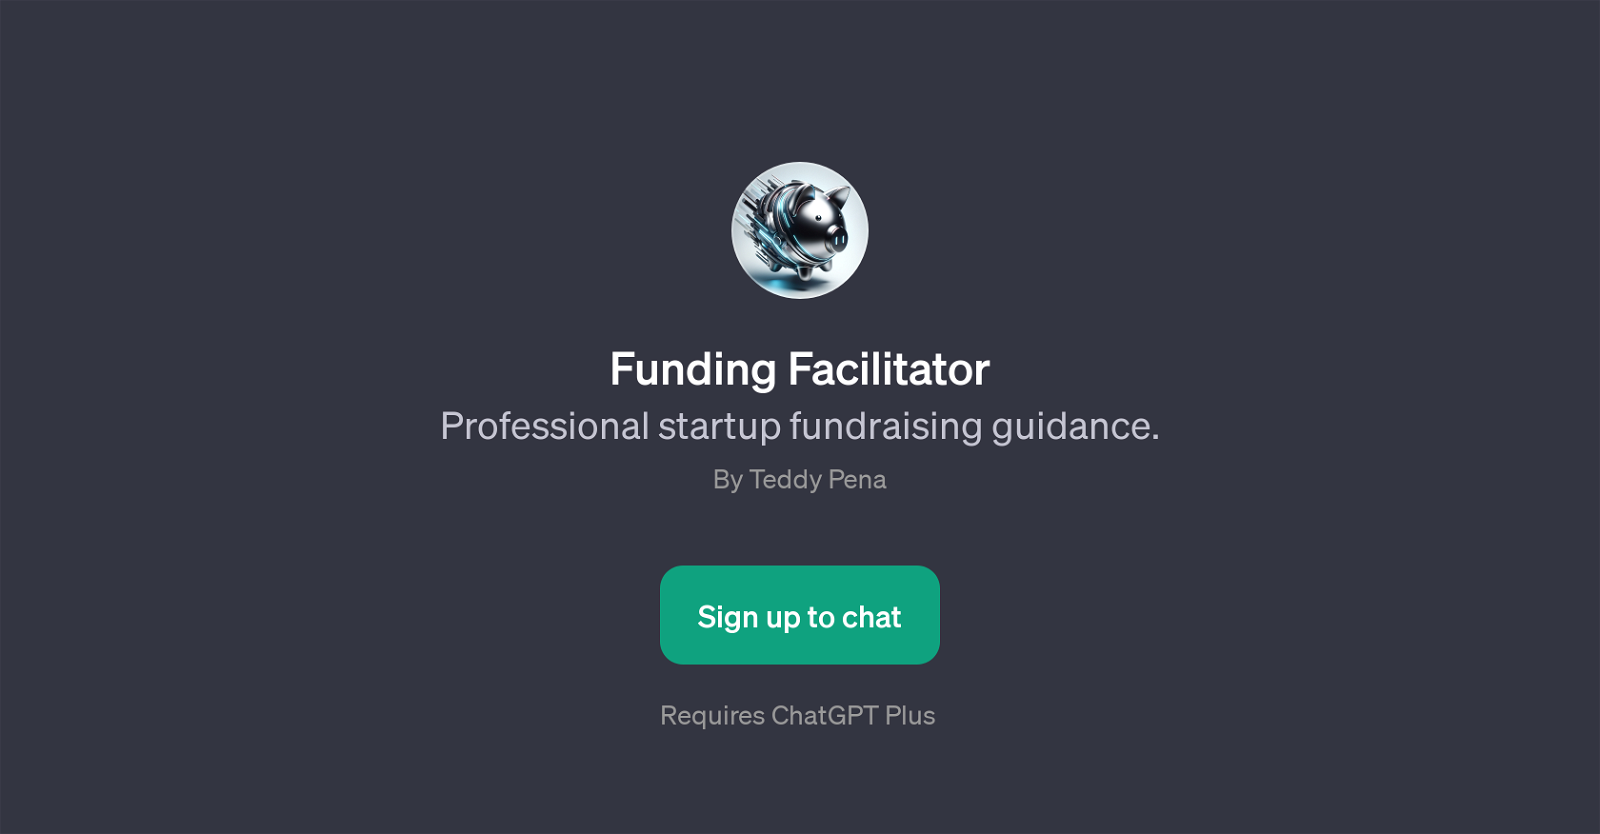 Funding Facilitator website